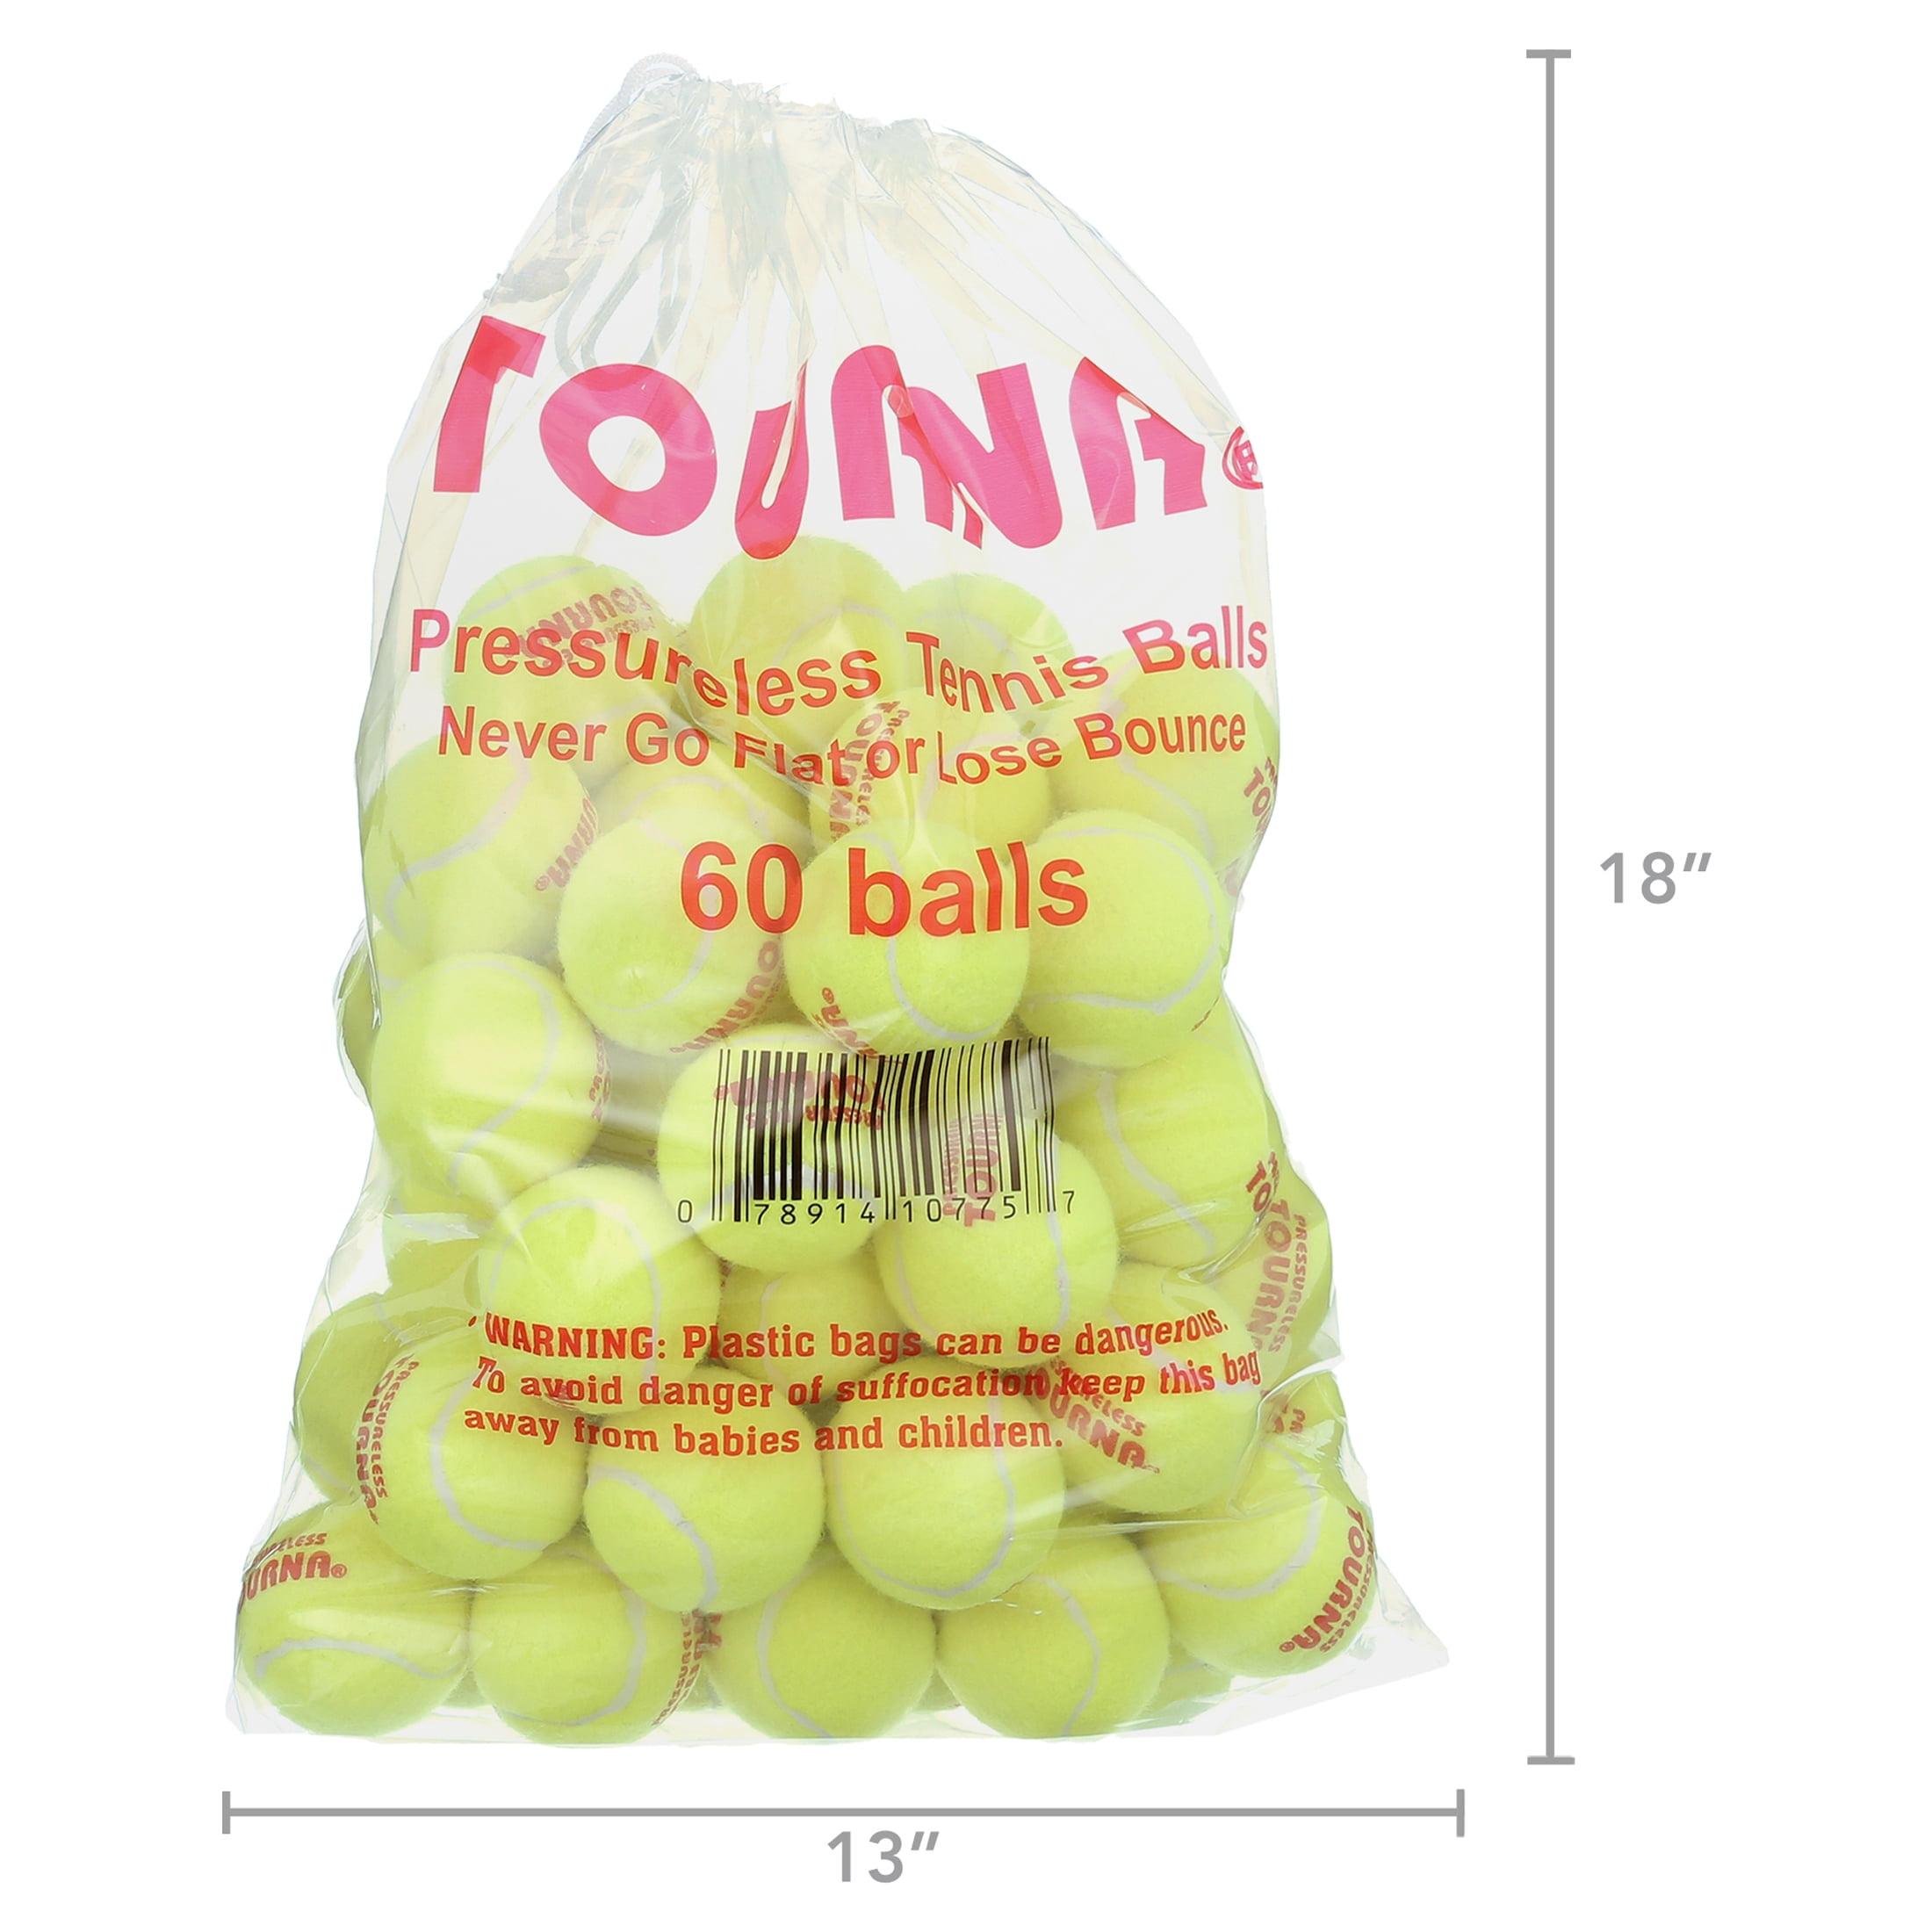 Tourna Pressureless 60 Pack Tennis Balls